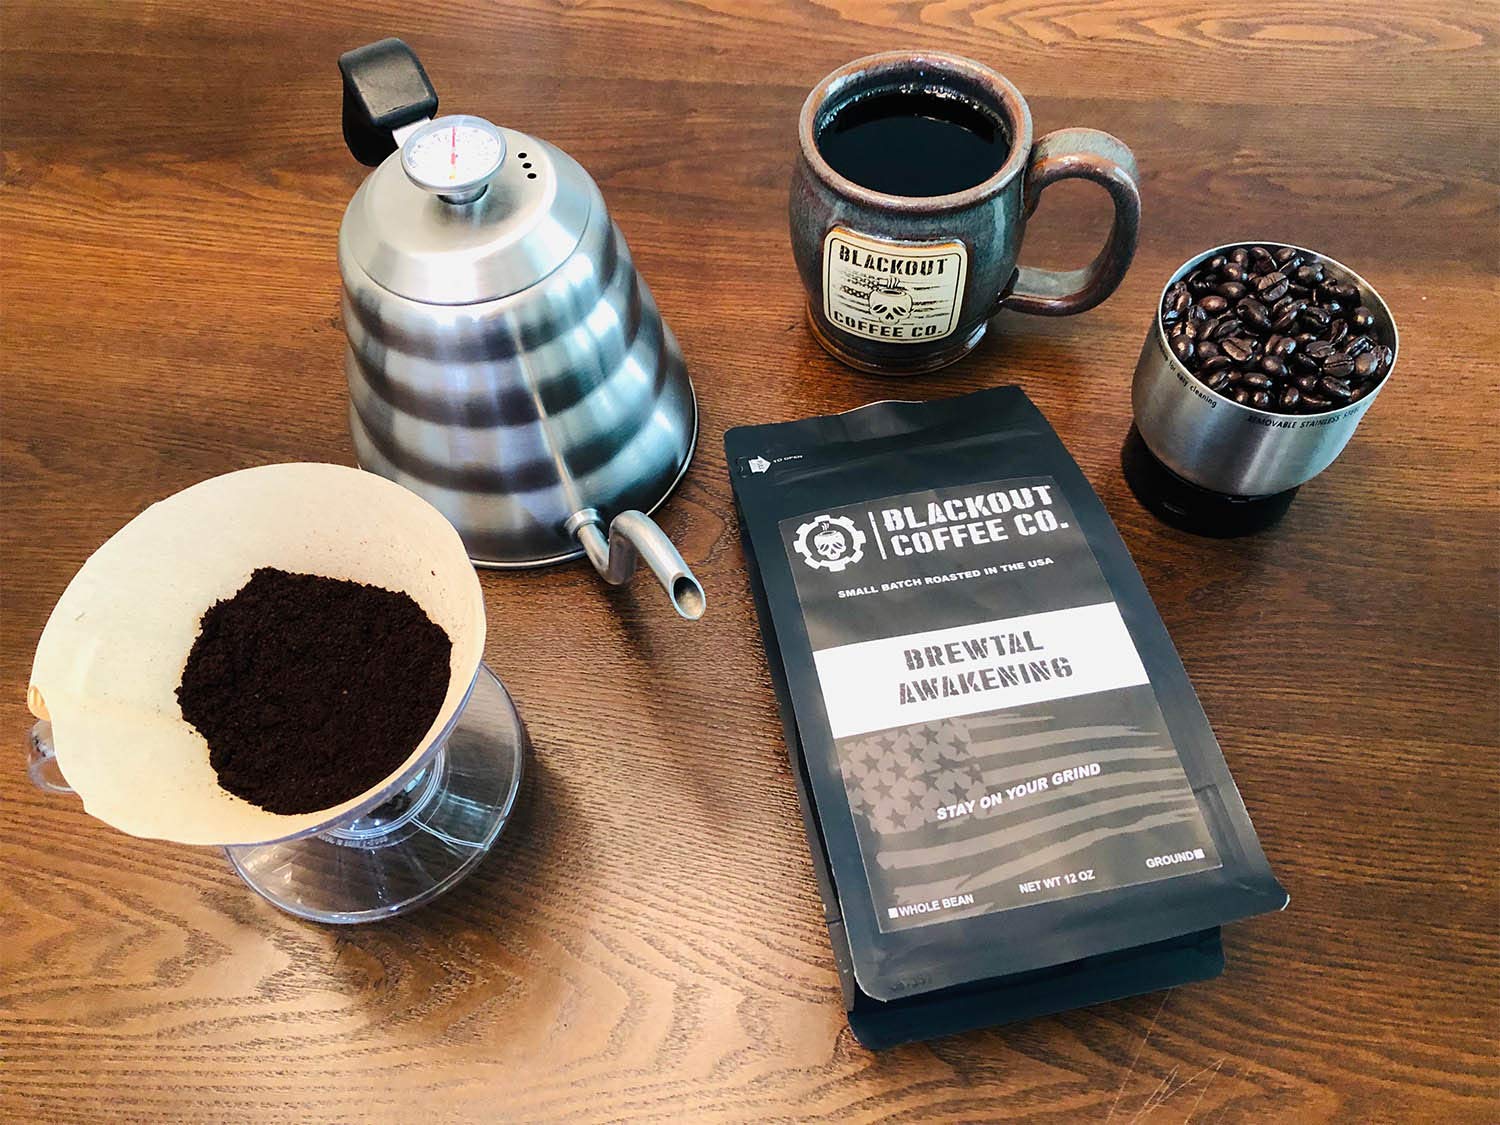 Blackout Coffee, Brewtal Awakening Dark Roast Coffee, High Caffeine, Bold, Rich, Aromatic, Strong & Flavored Coffee Beans, Fresh Roasted In The USA – 12 oz Bag (Ground Coffee)